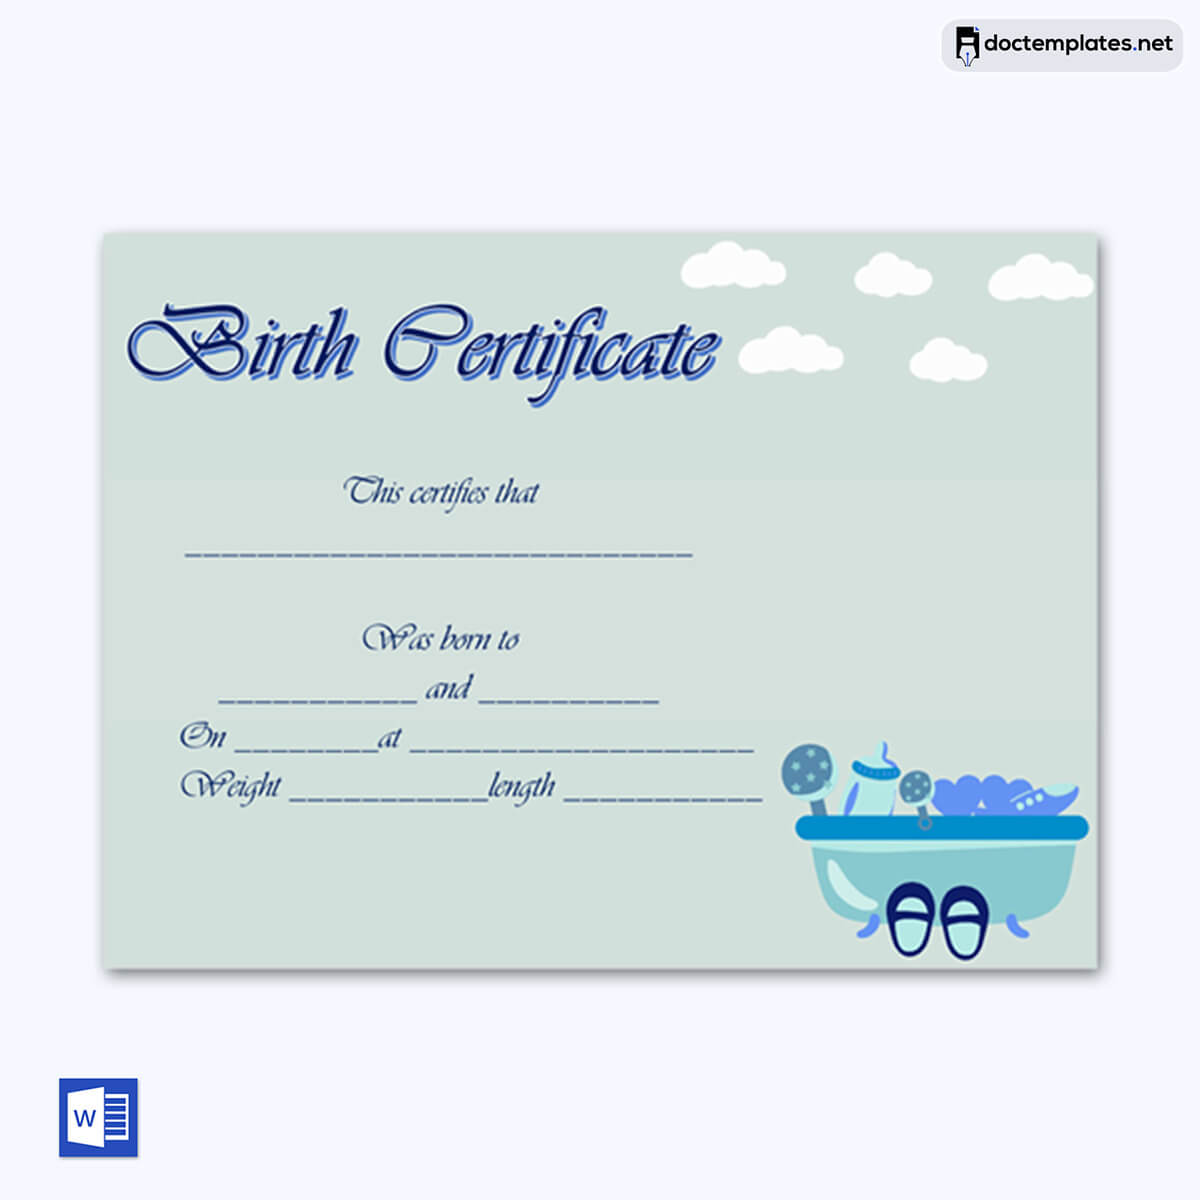 Image of Hospital birth certificate format PDF
Hospital birth certificate format PDF
05